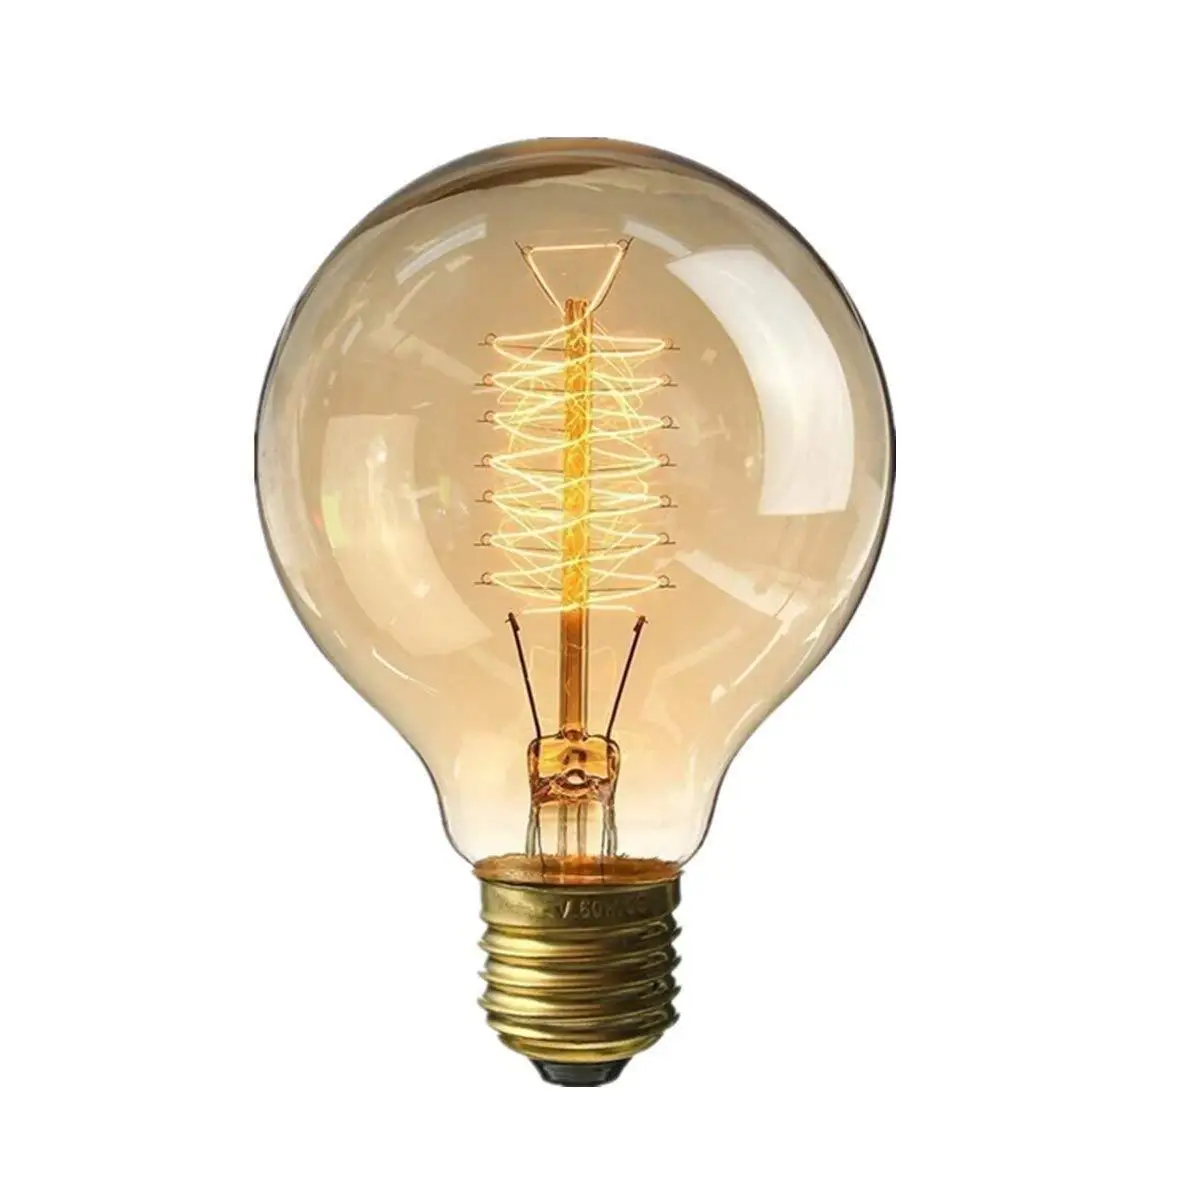 adison Vintage lamps 220V G80 25W 40W 60W E27 BRASS GOLDEN